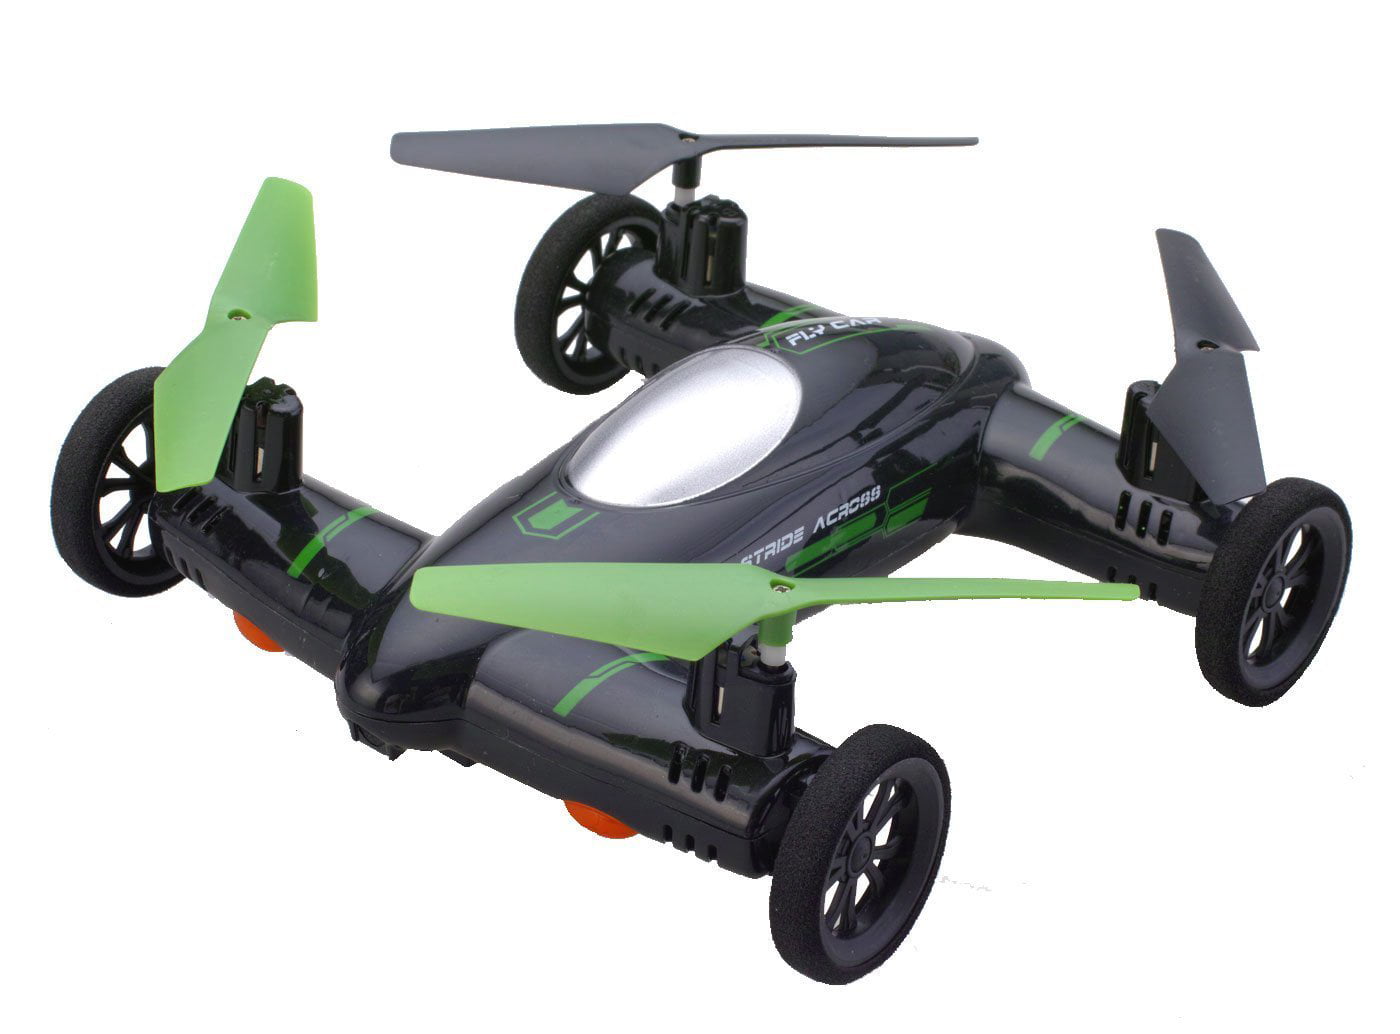 Fly car 2. Летающий автомобиль квадрокоптер. Дроны электромобили. Квадрокоптер Flying car Explorer. JJRC Battery x13.